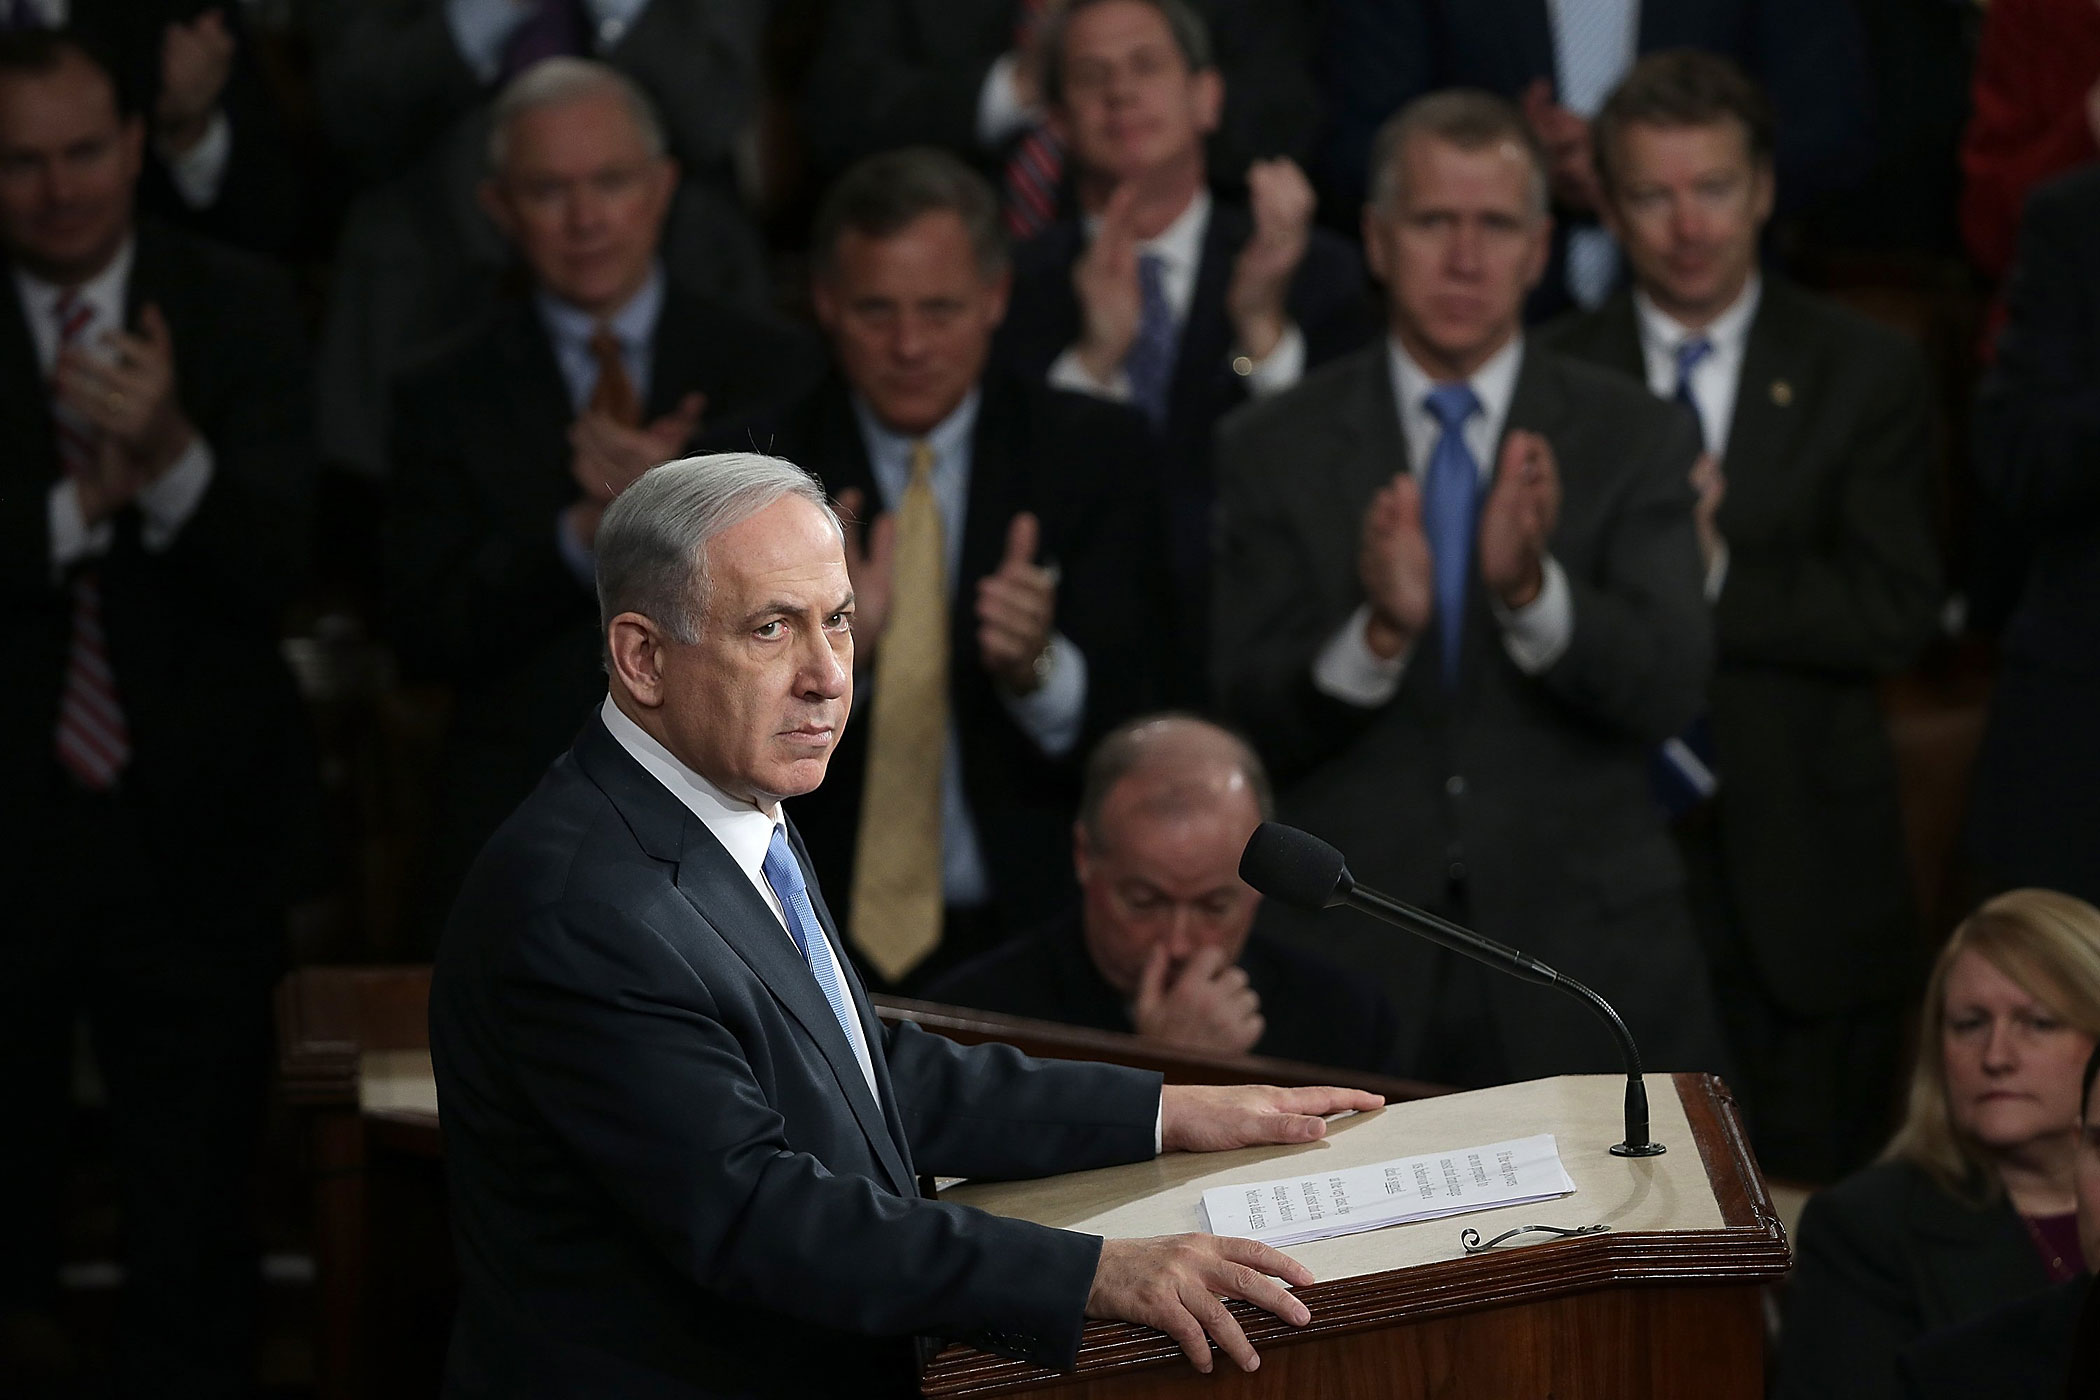 Israeli PM Netanyahu Addresses Joint Meeting Of Congress